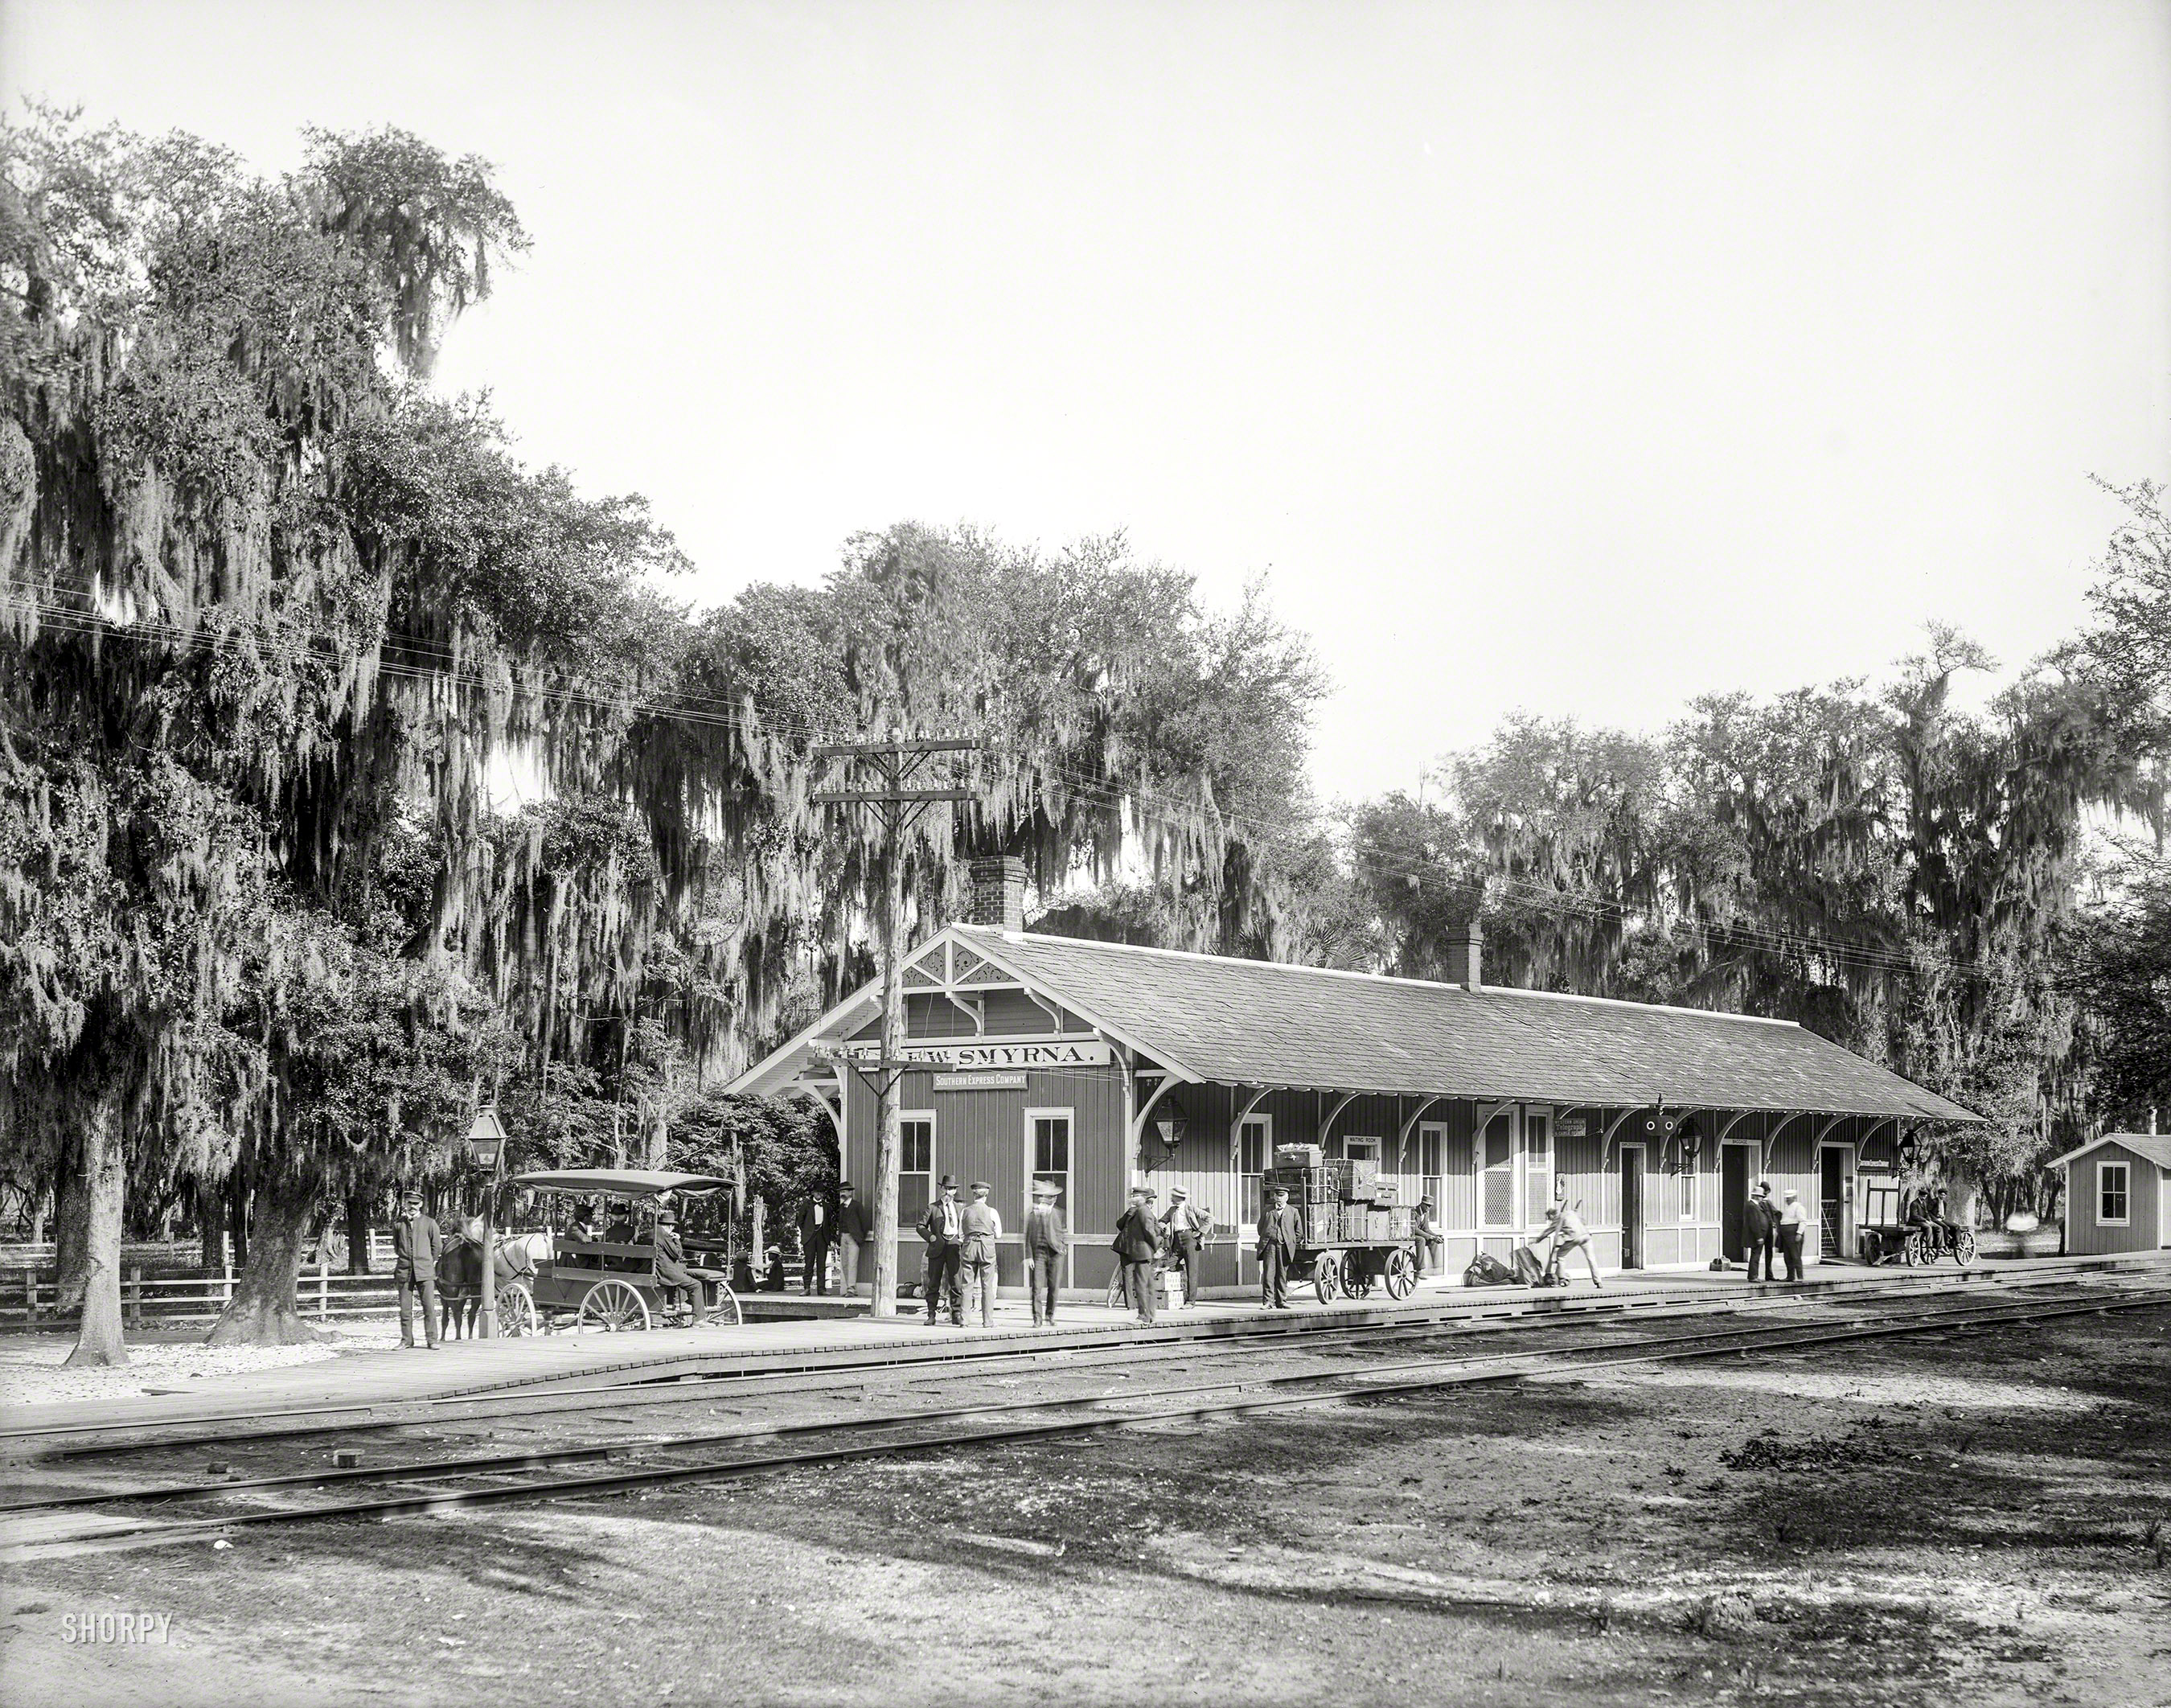 1904. "East Coast Railway station, New Smyrna (Beach), Florida." 8x10 inch dry plate glass negative, Detroit Publishing Company. View full size.